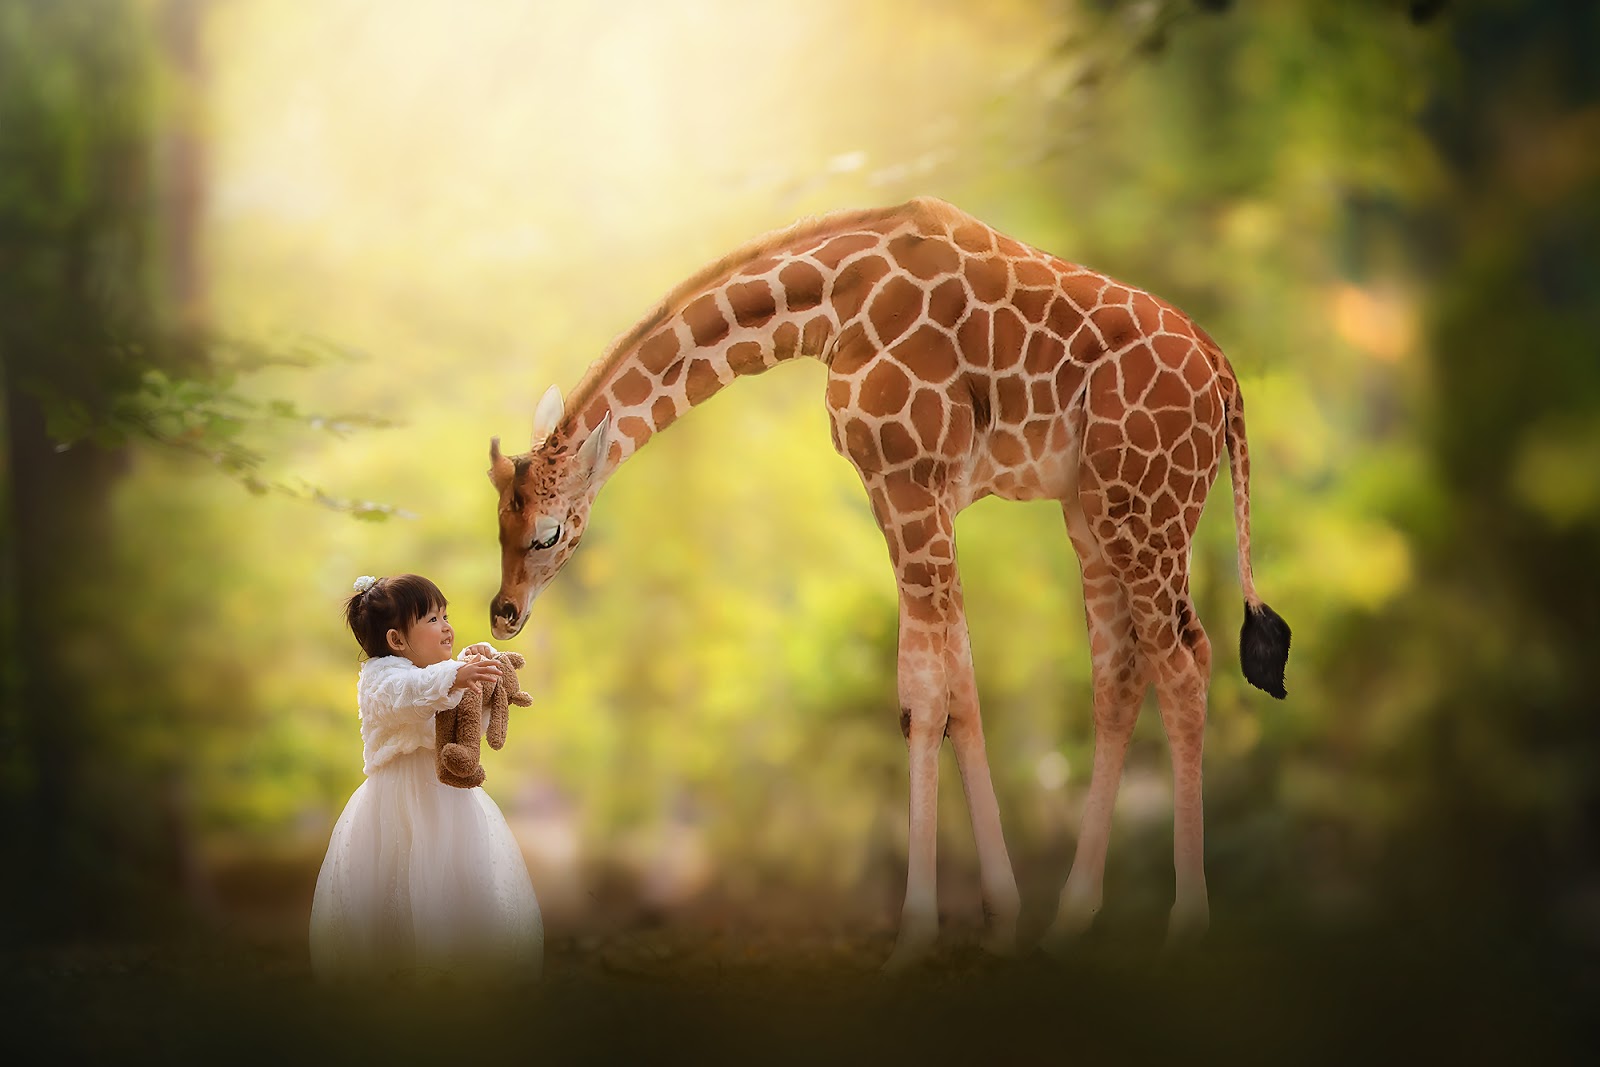 Canon 5d mark III fine art portrait of a little girl kissing a giraf by Willie Kers 